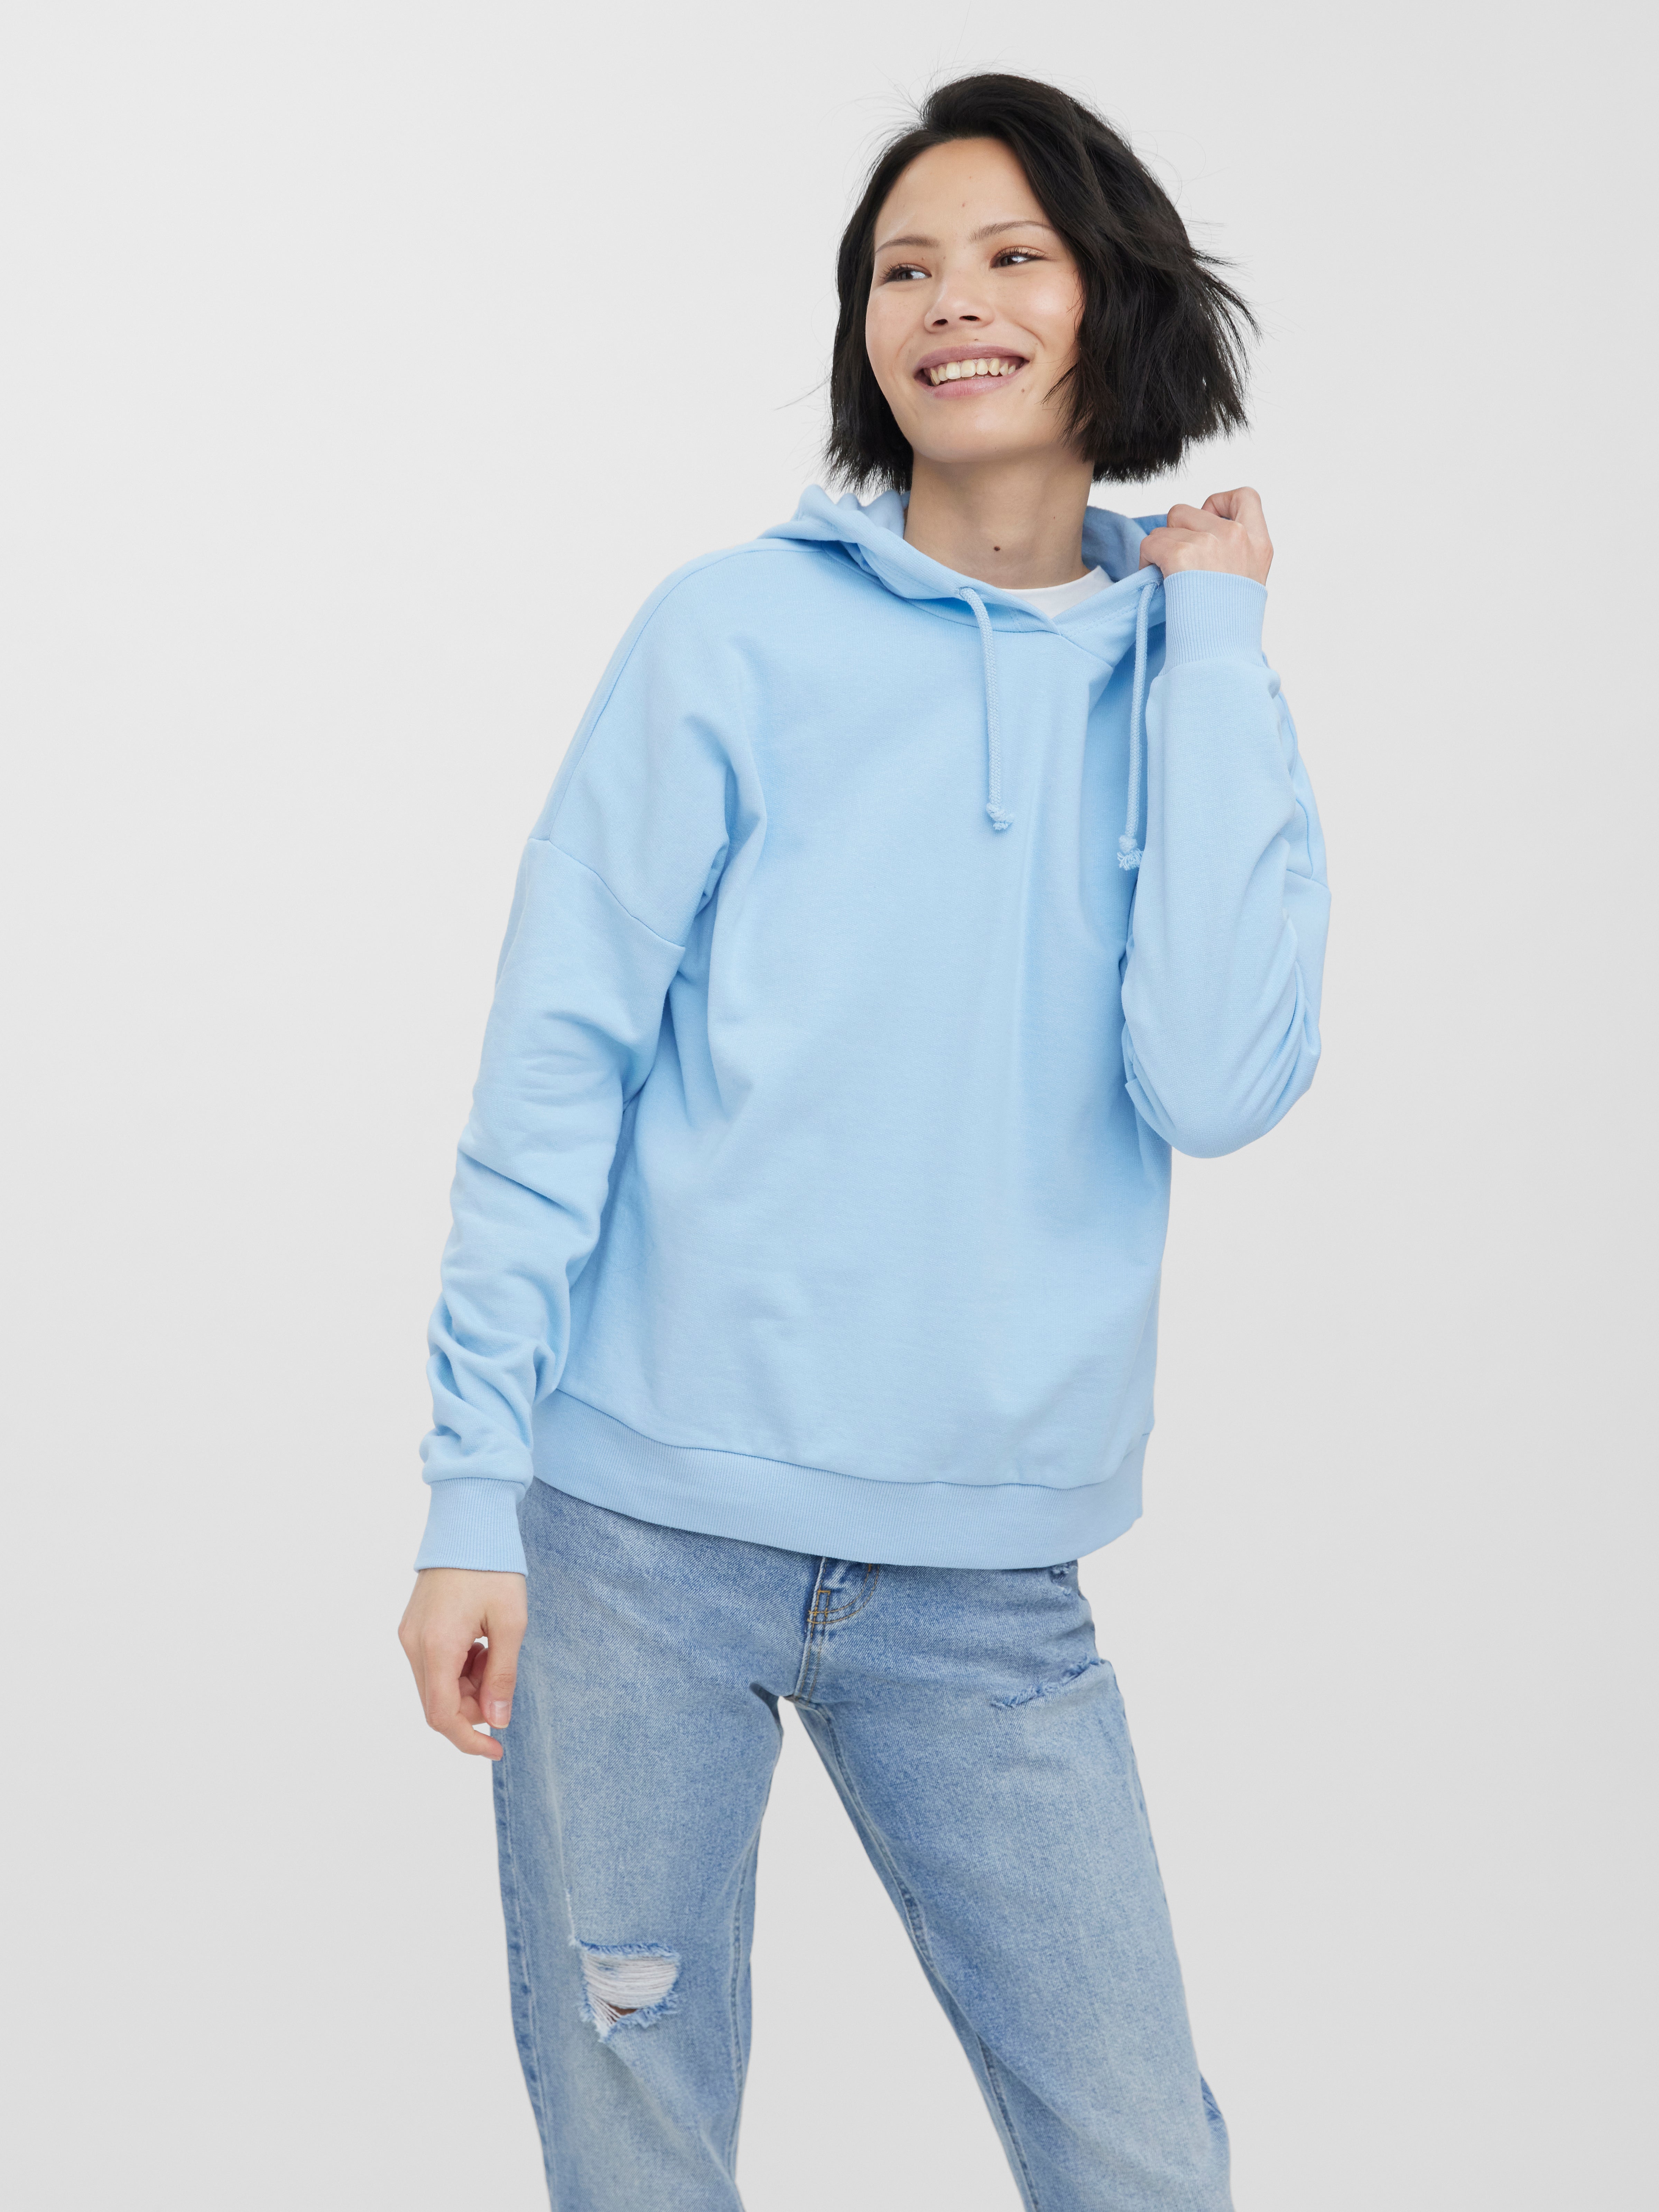 Vero Moda sweatshirt Blau M DAMEN Pullovers & Sweatshirts Sport Rabatt 57 % 